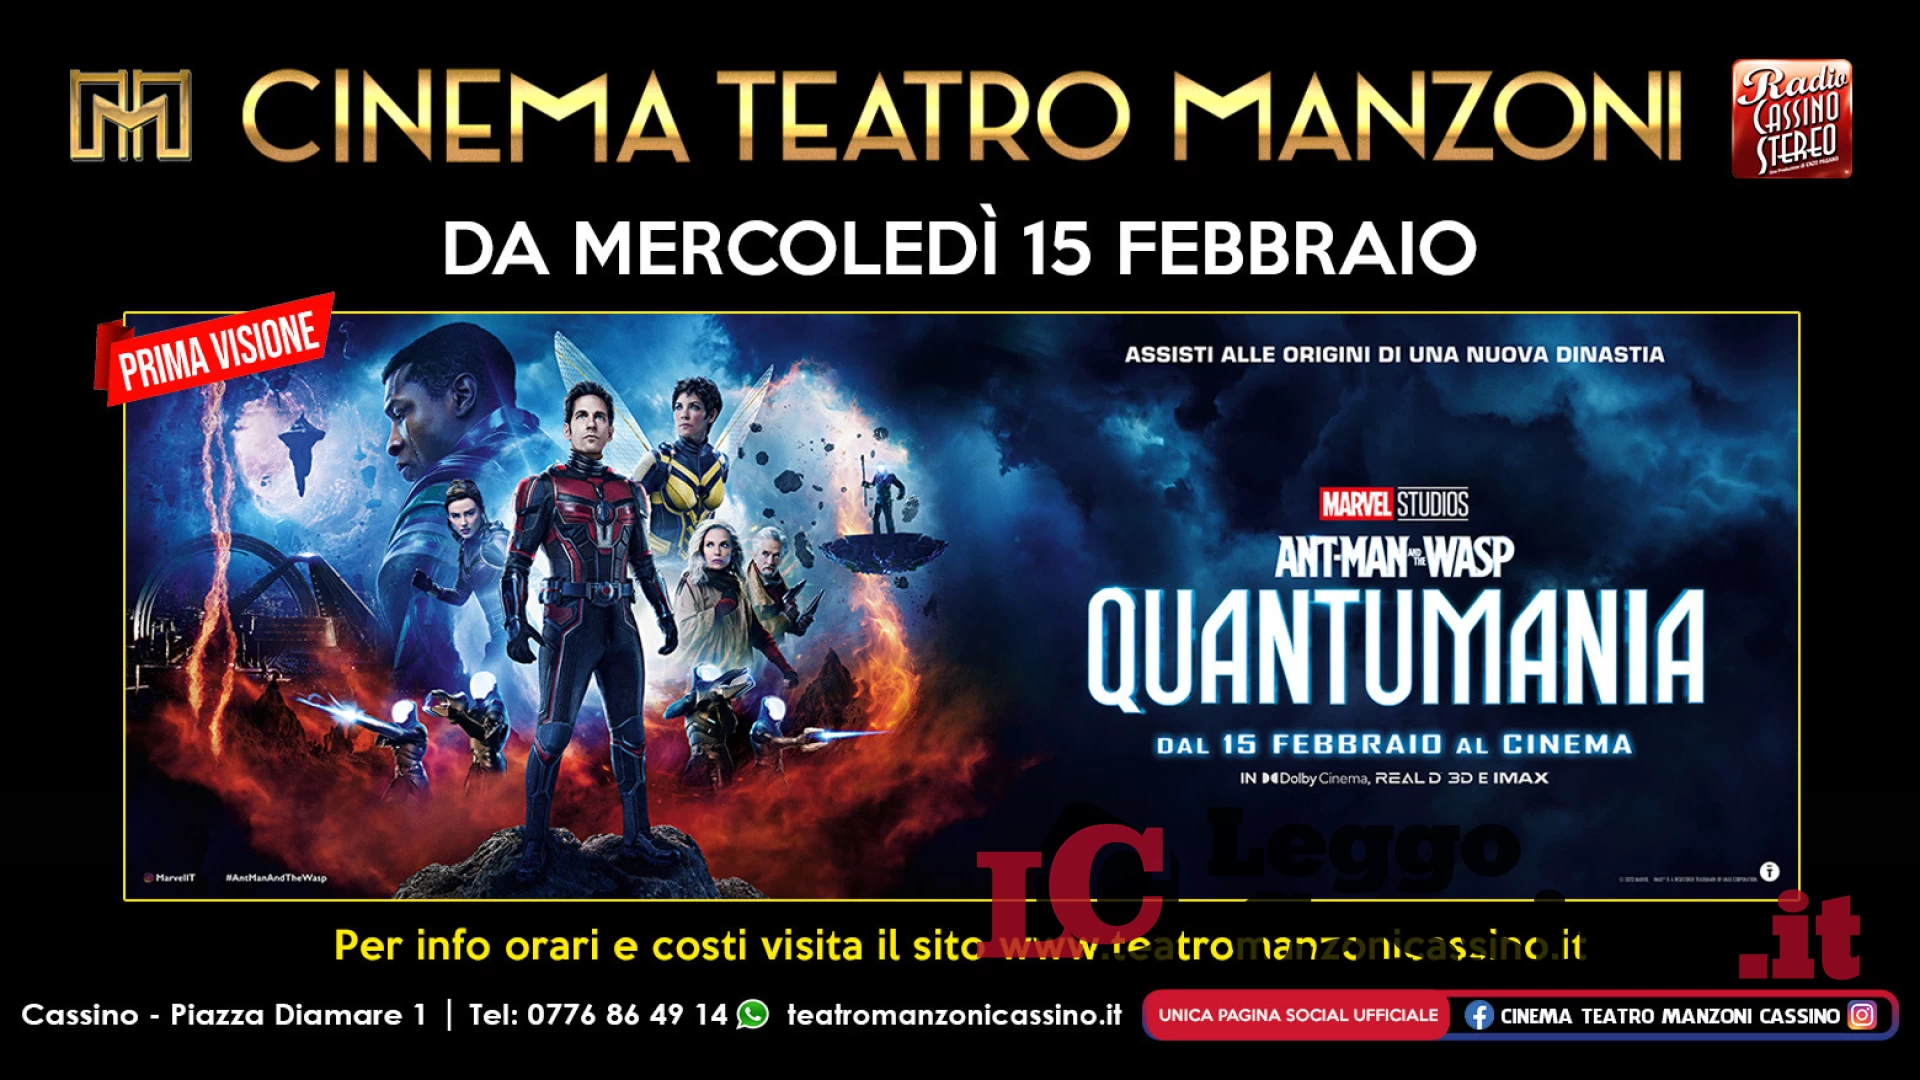 Al Cinema Teatro Manzoni Cassino arriva: "Ant Man and the  Wasp - Quantumania"